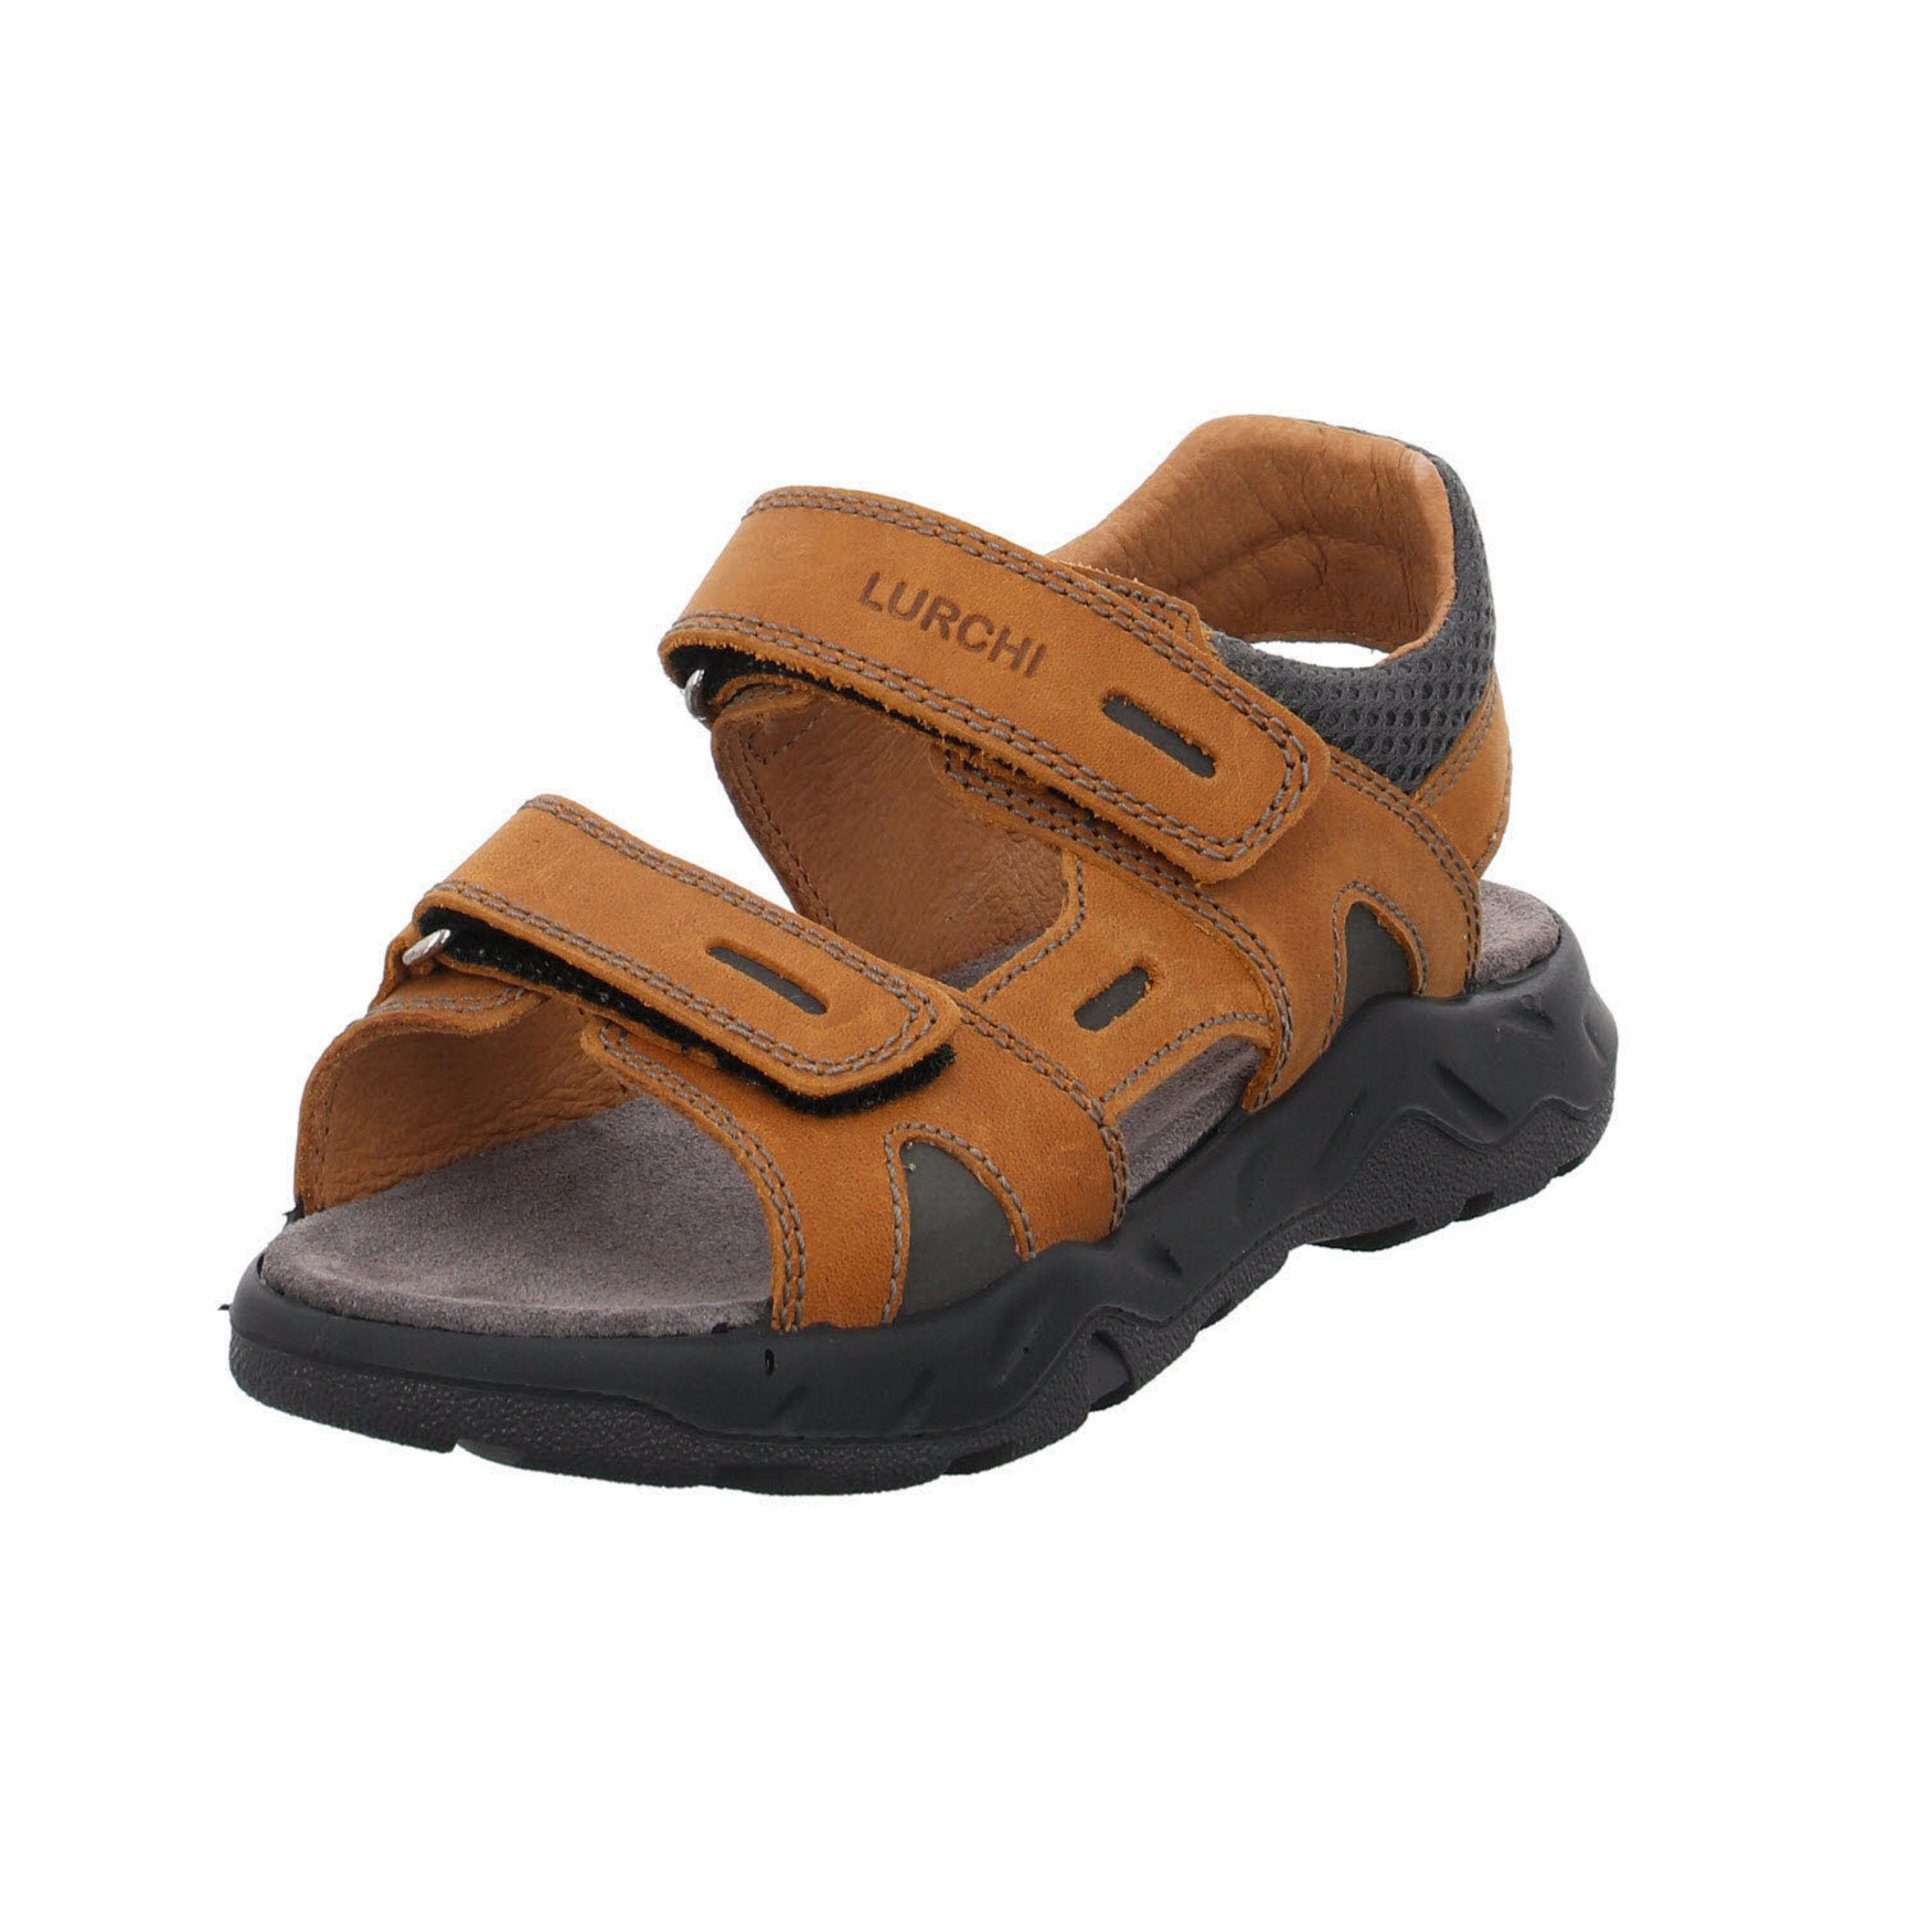 Lurchi Jungen Sandalen Schuhe Owen Sandale Kinderschuhe Sandale Leder-/Textilkombination